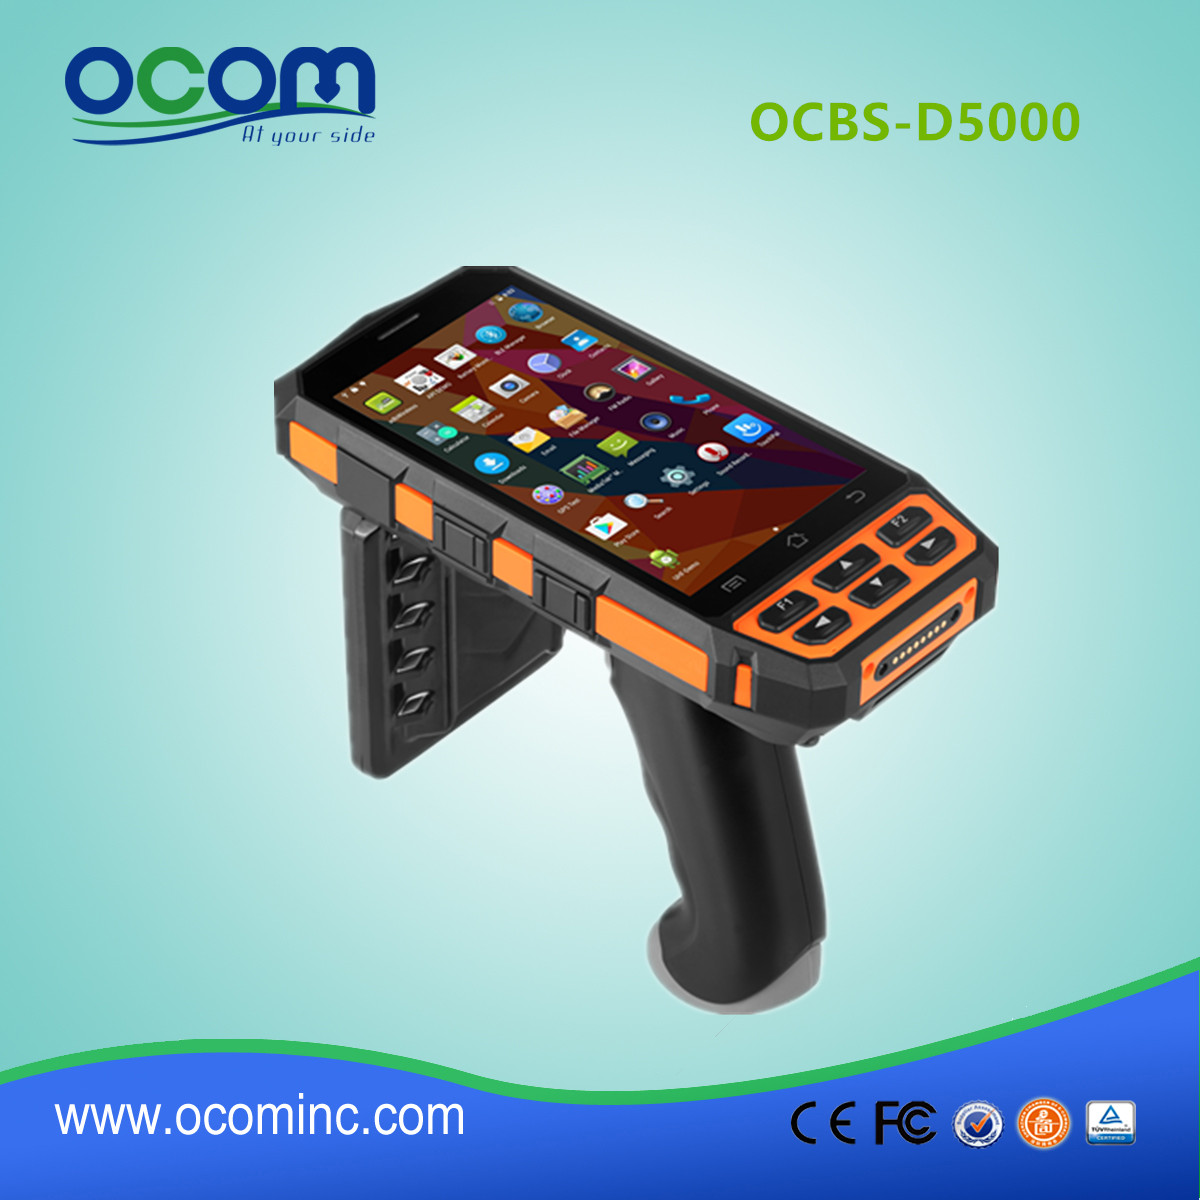 OCBS-D5000 Terminale portatile mobile portatile android portatile